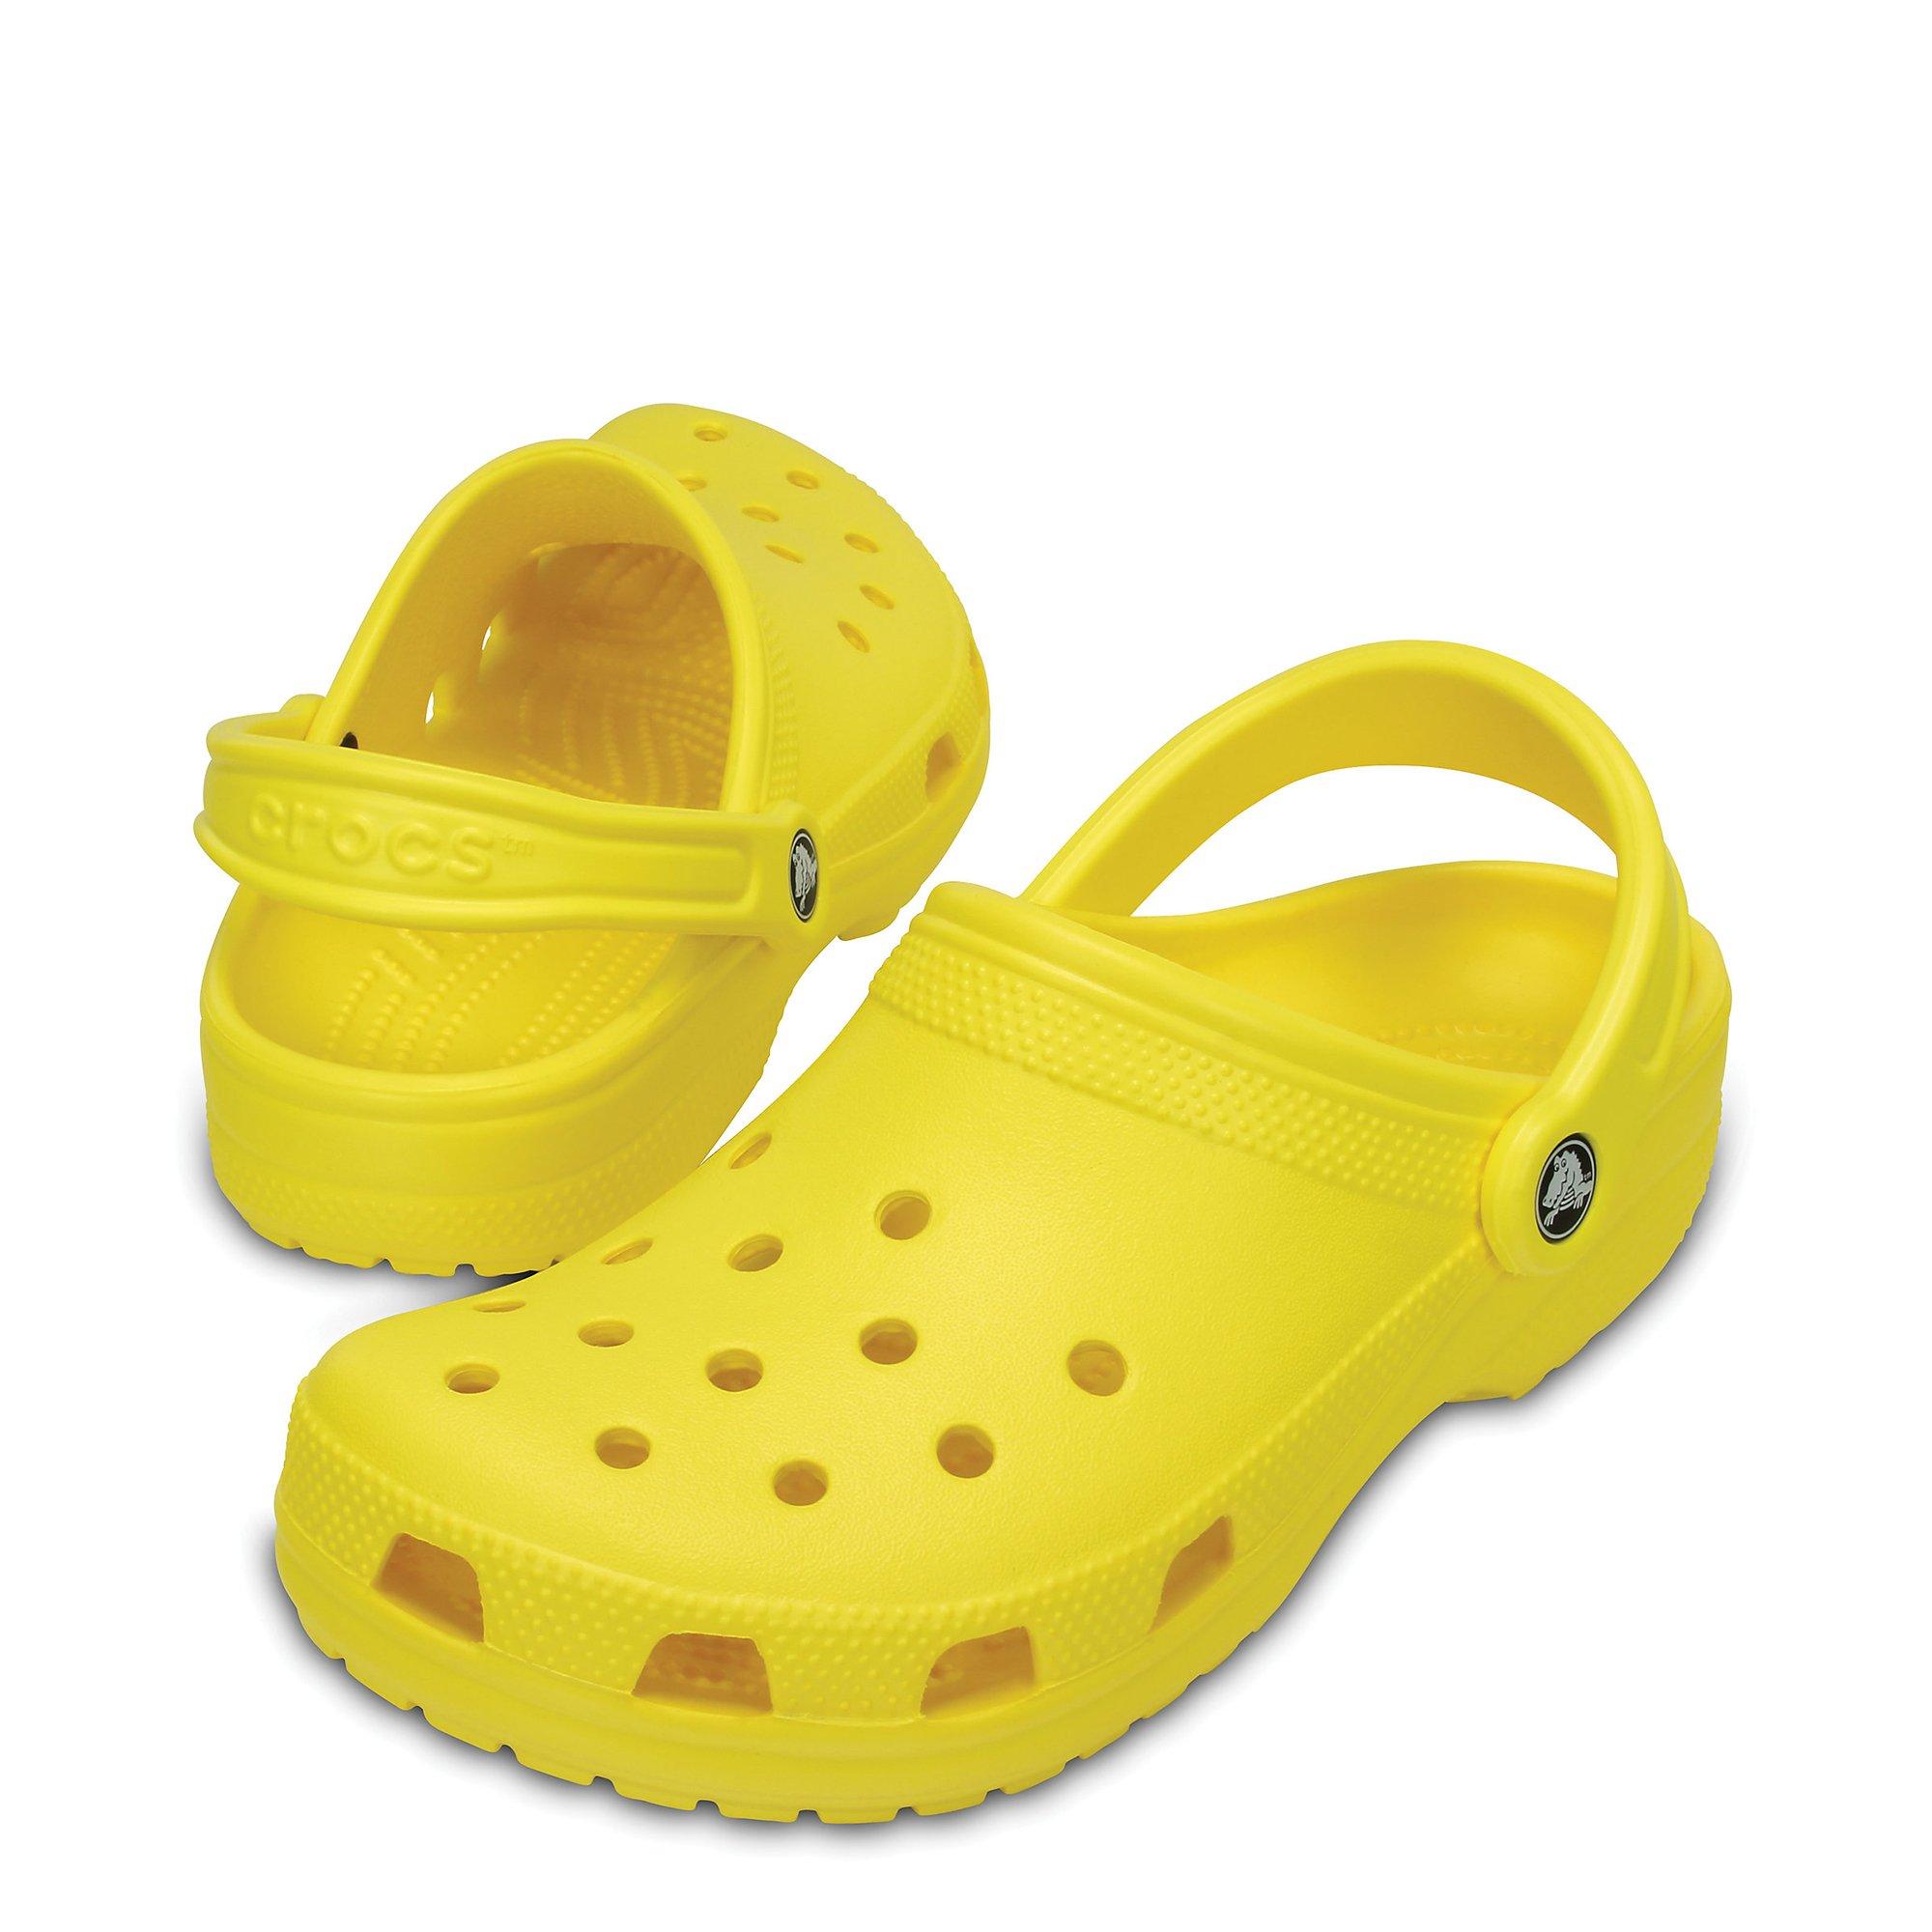 mens yellow crocs